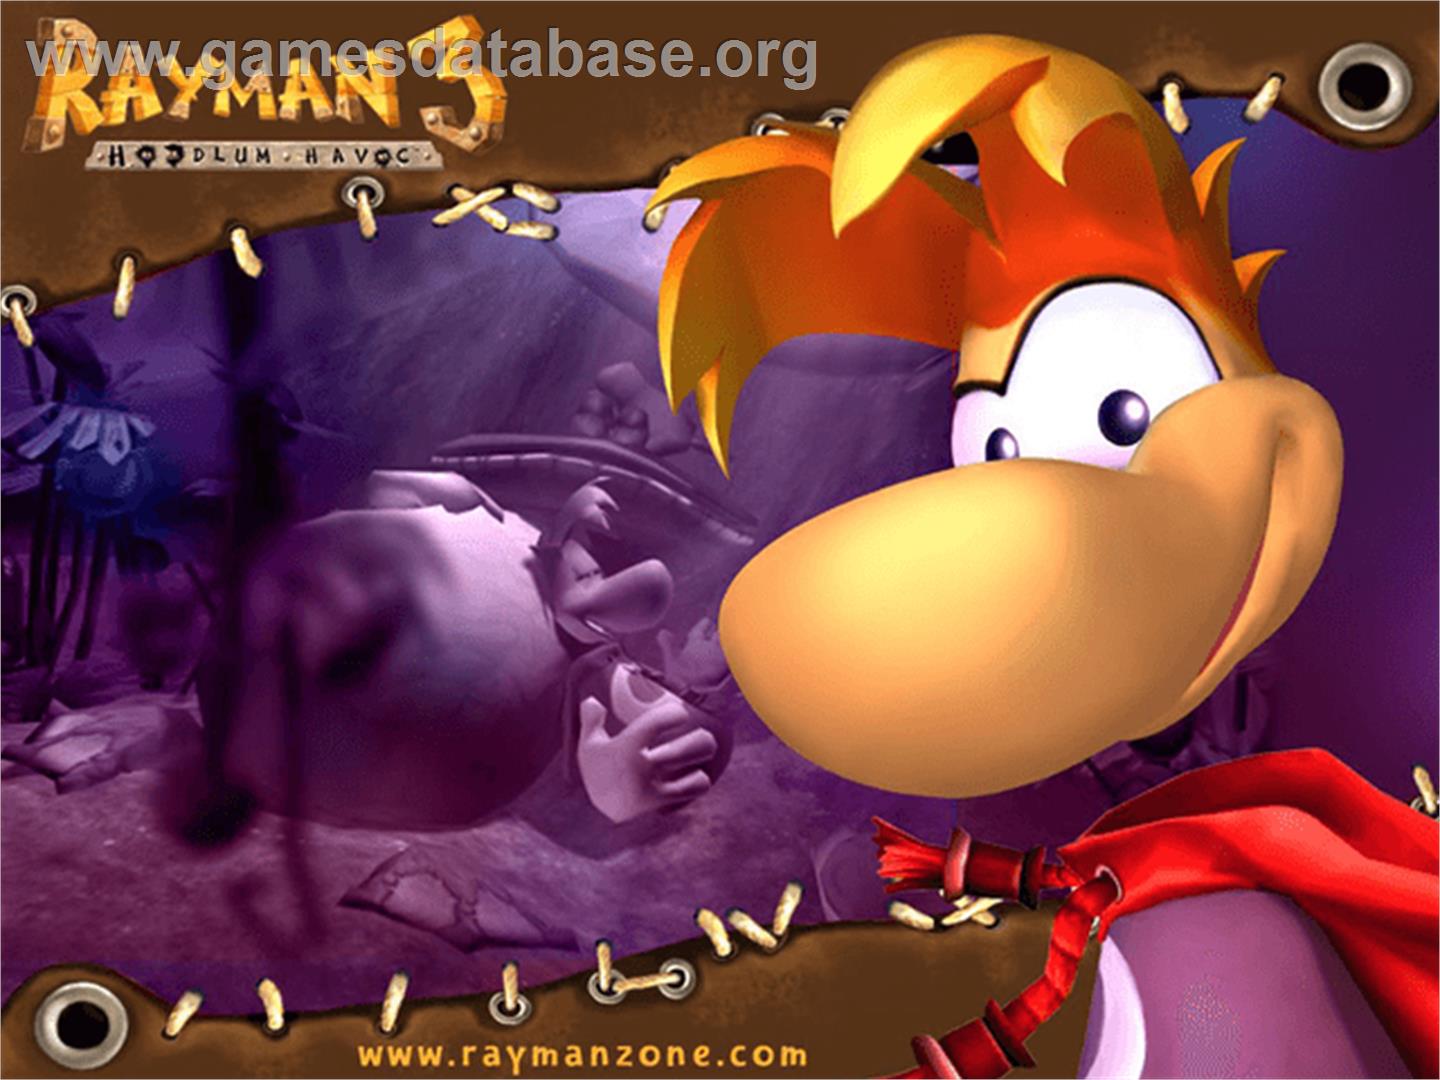 Rayman 3: Hoodlum Havoc - Microsoft Xbox - Artwork - Title Screen